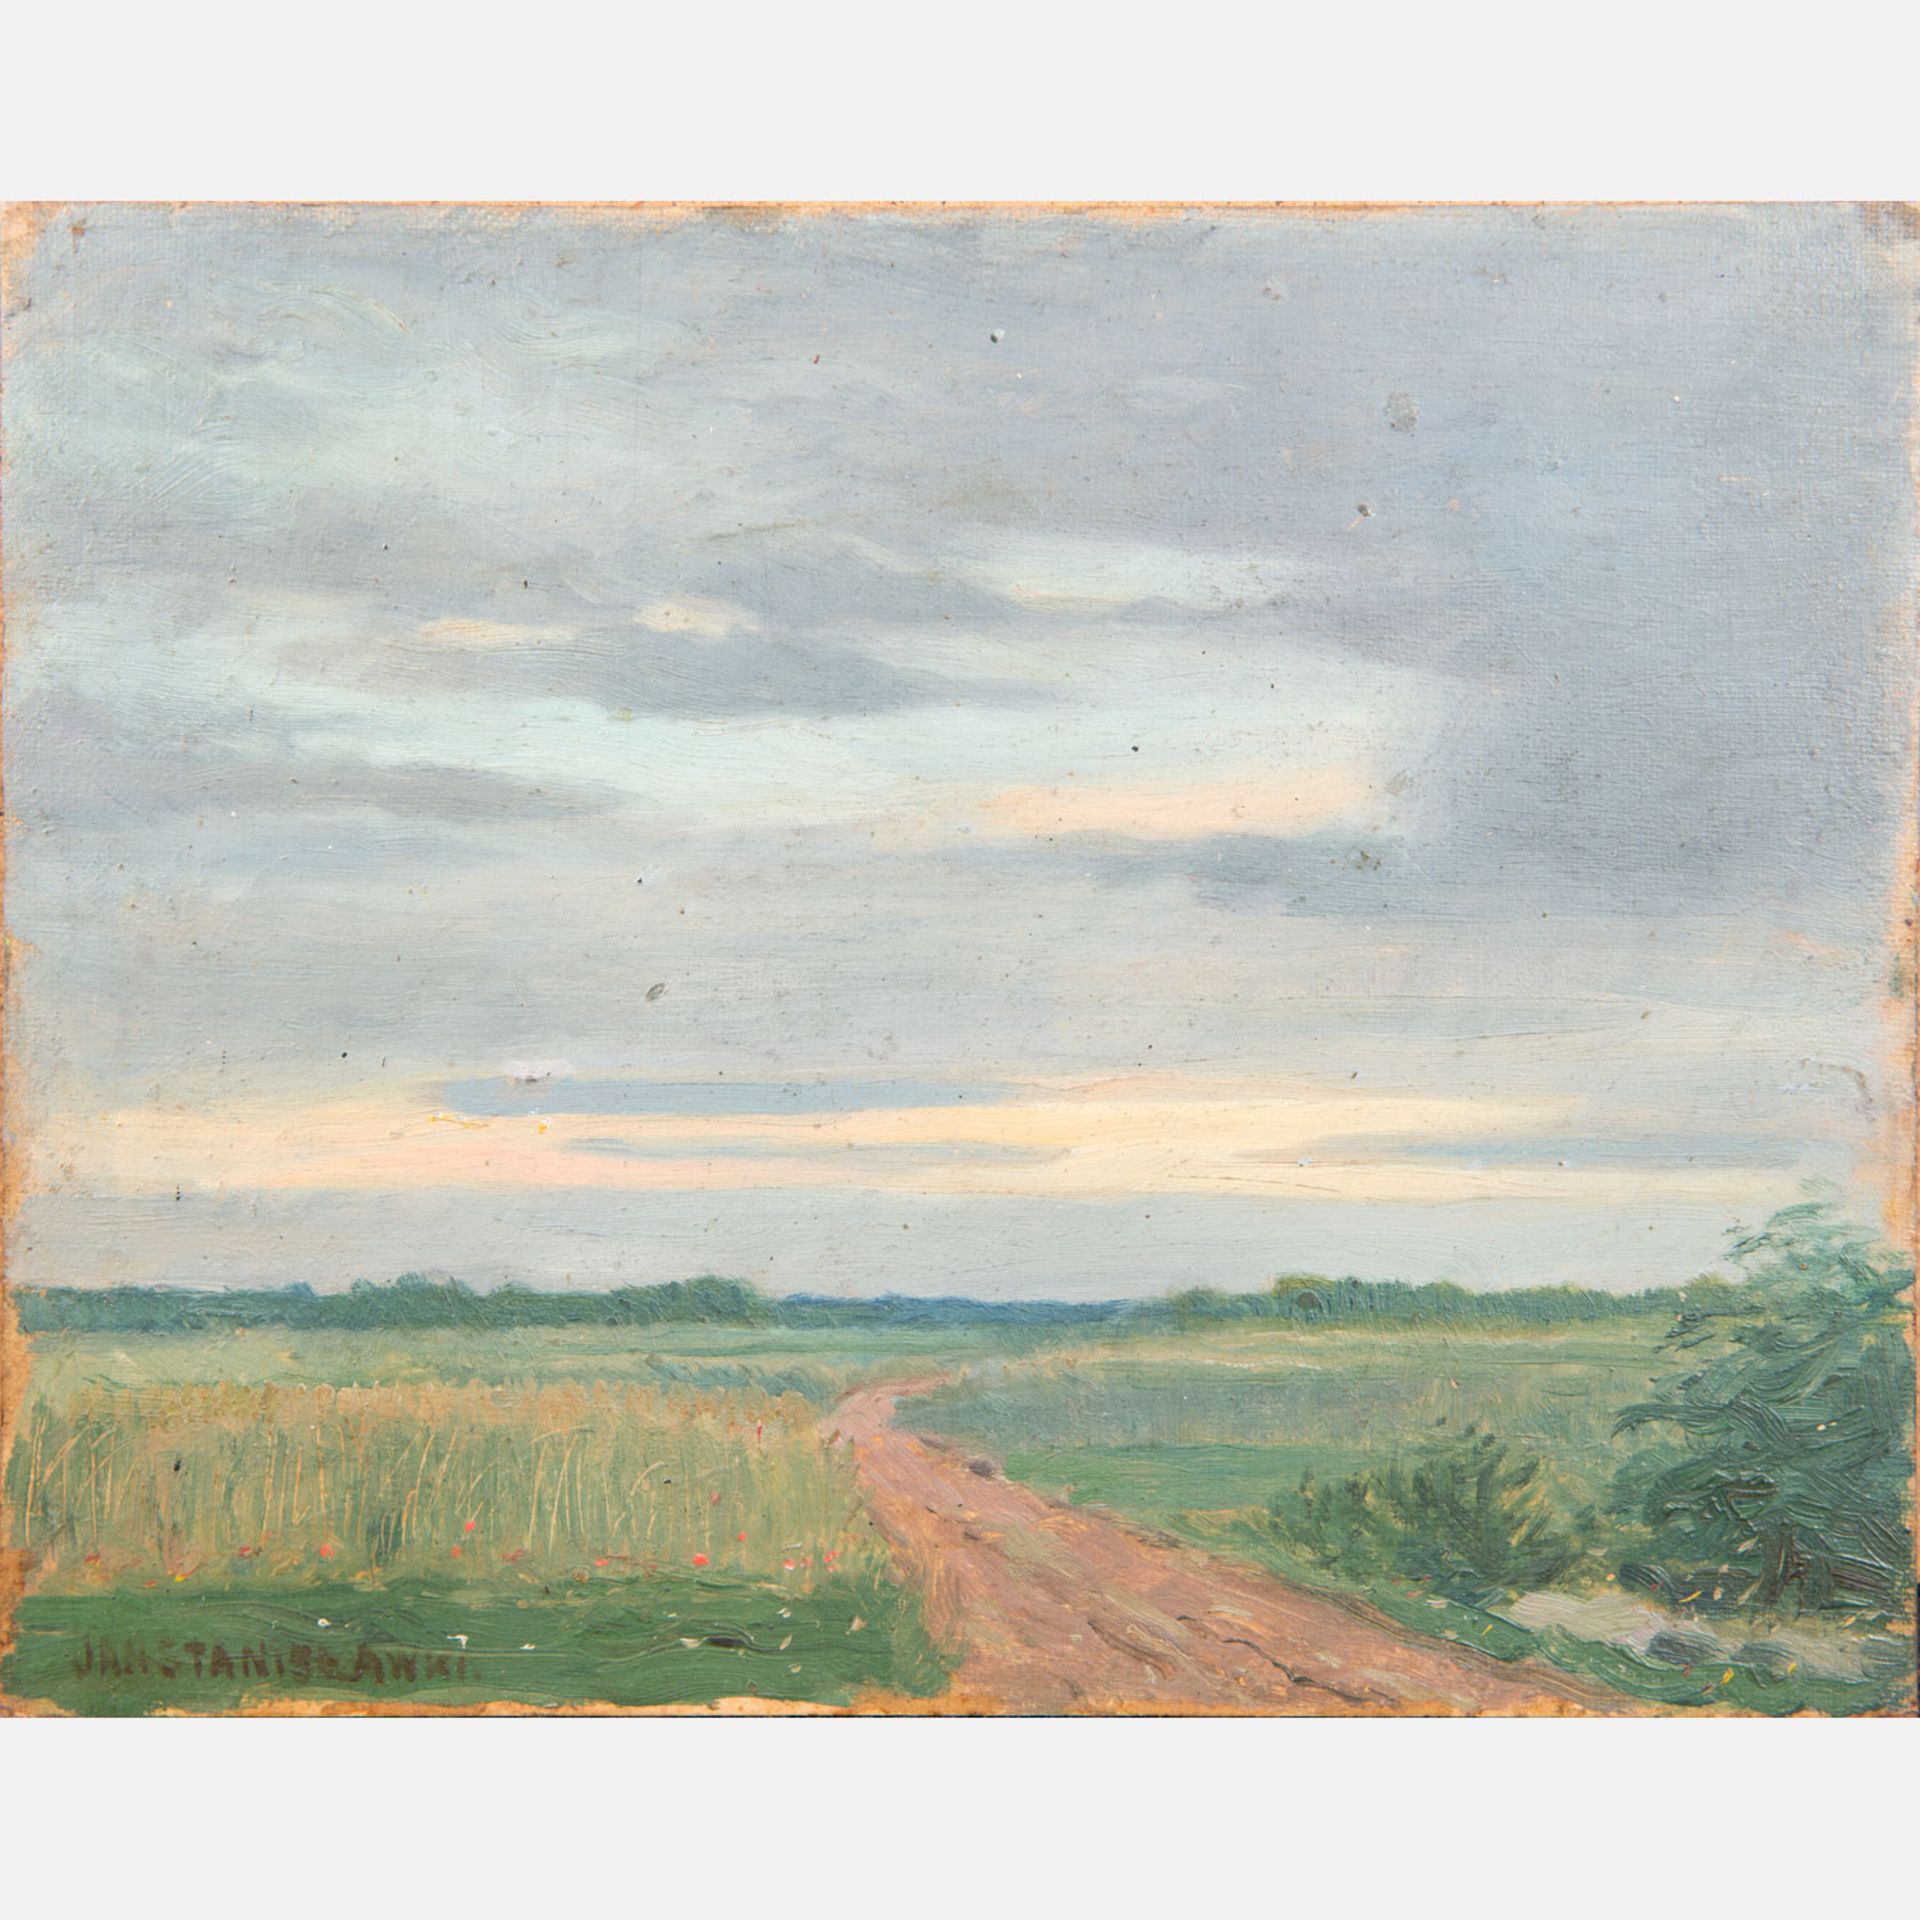 Jan Stanisławski (1860-1907) "Droga przez pola", źródło: Art Antique Gallery & Auctioneers E. P. Deutsch